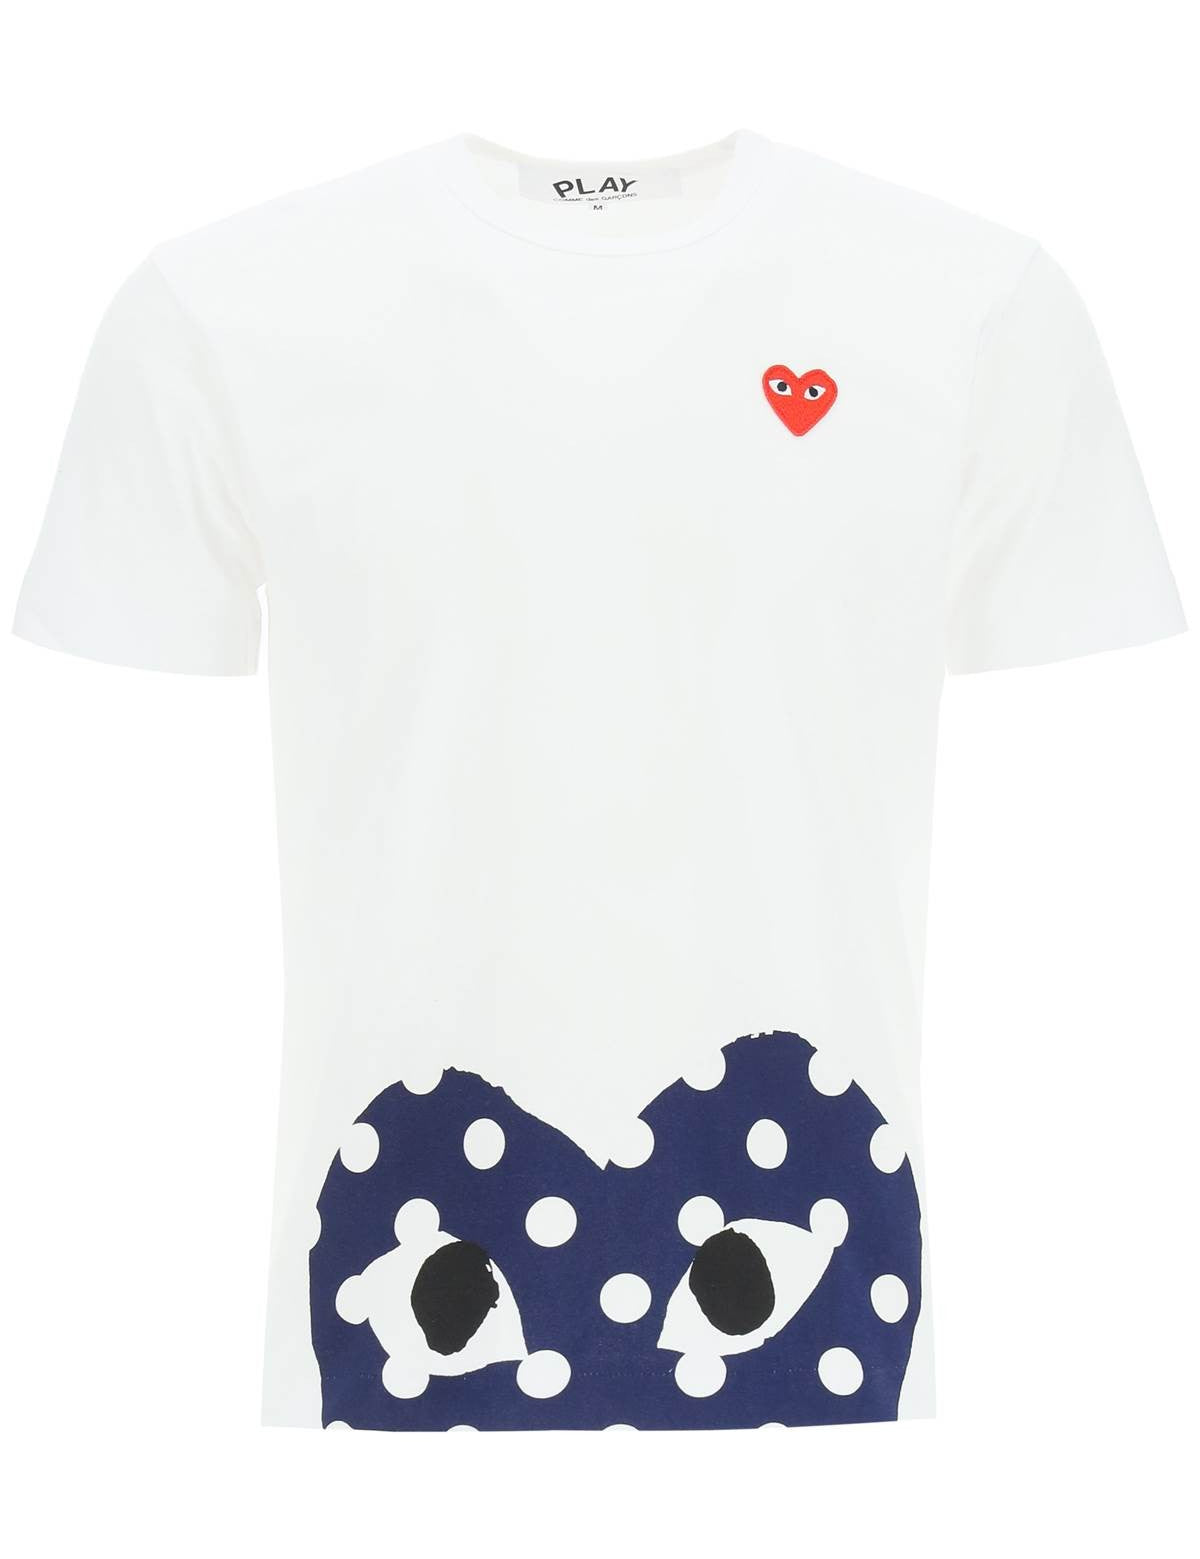 comme-des-garcons-play-heart-polka-dot-t-shirt.jpg